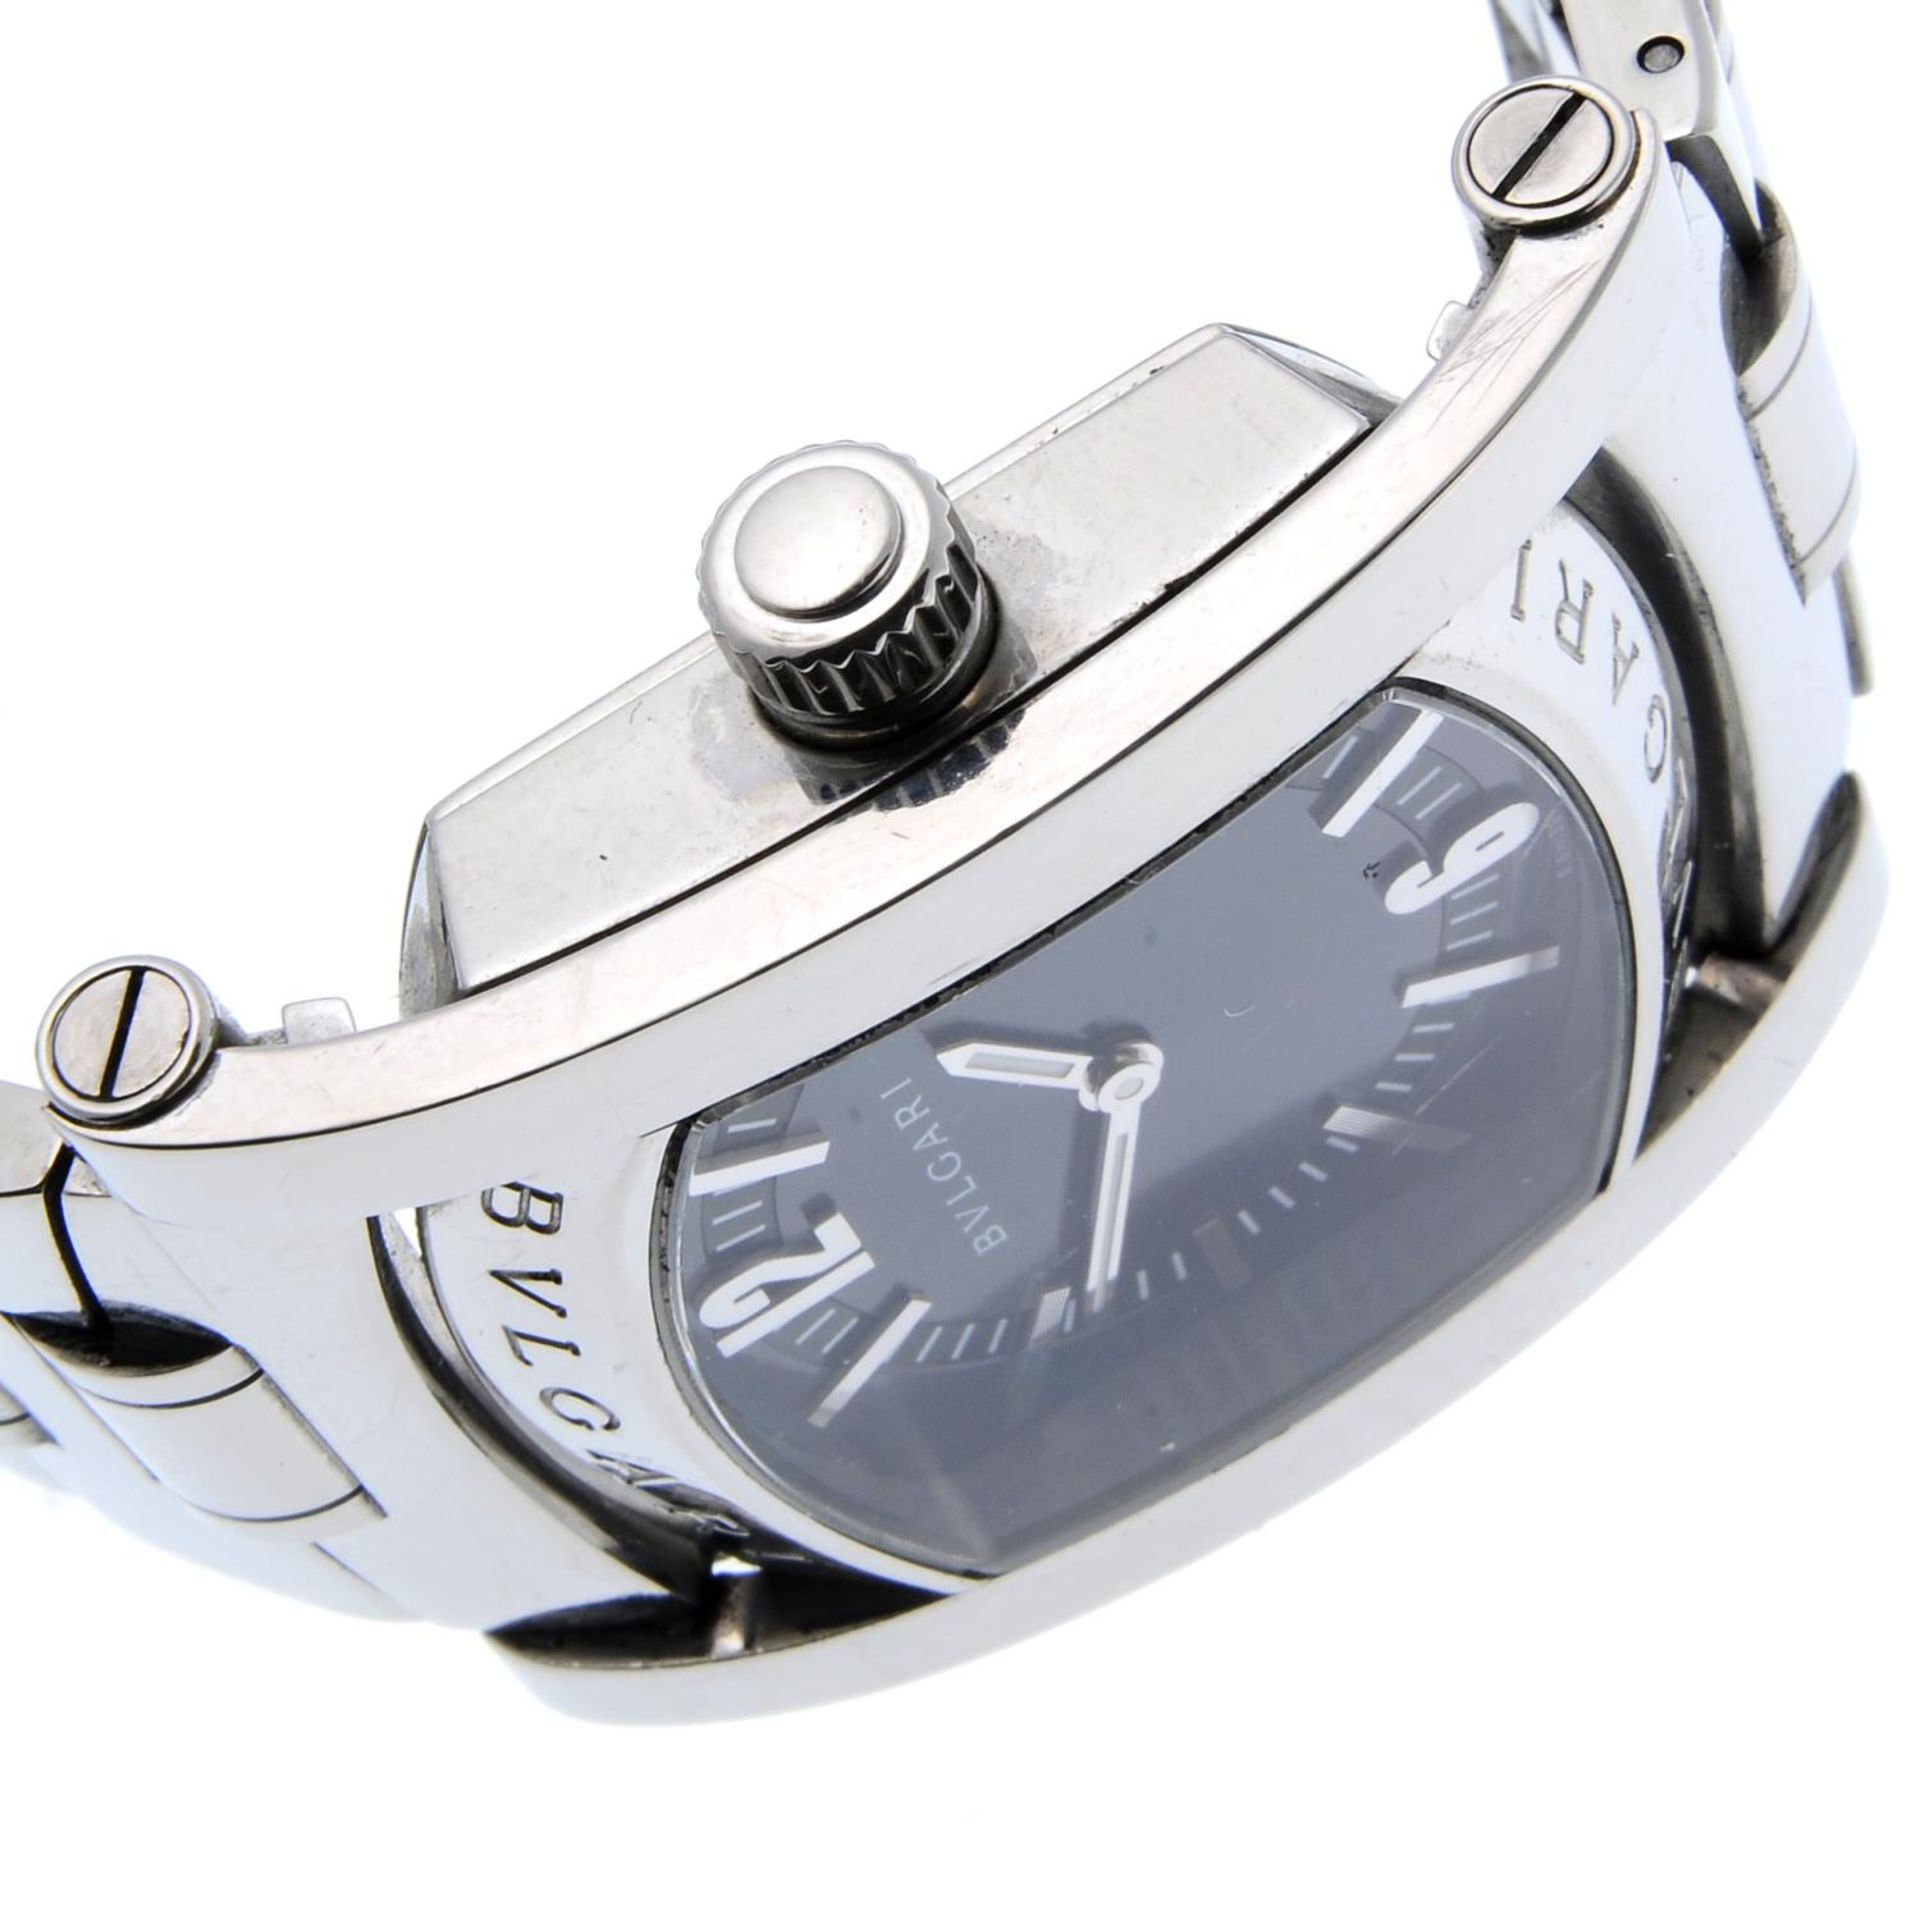 BULGARI - a lady's Assioma bracelet watch. - Image 3 of 4